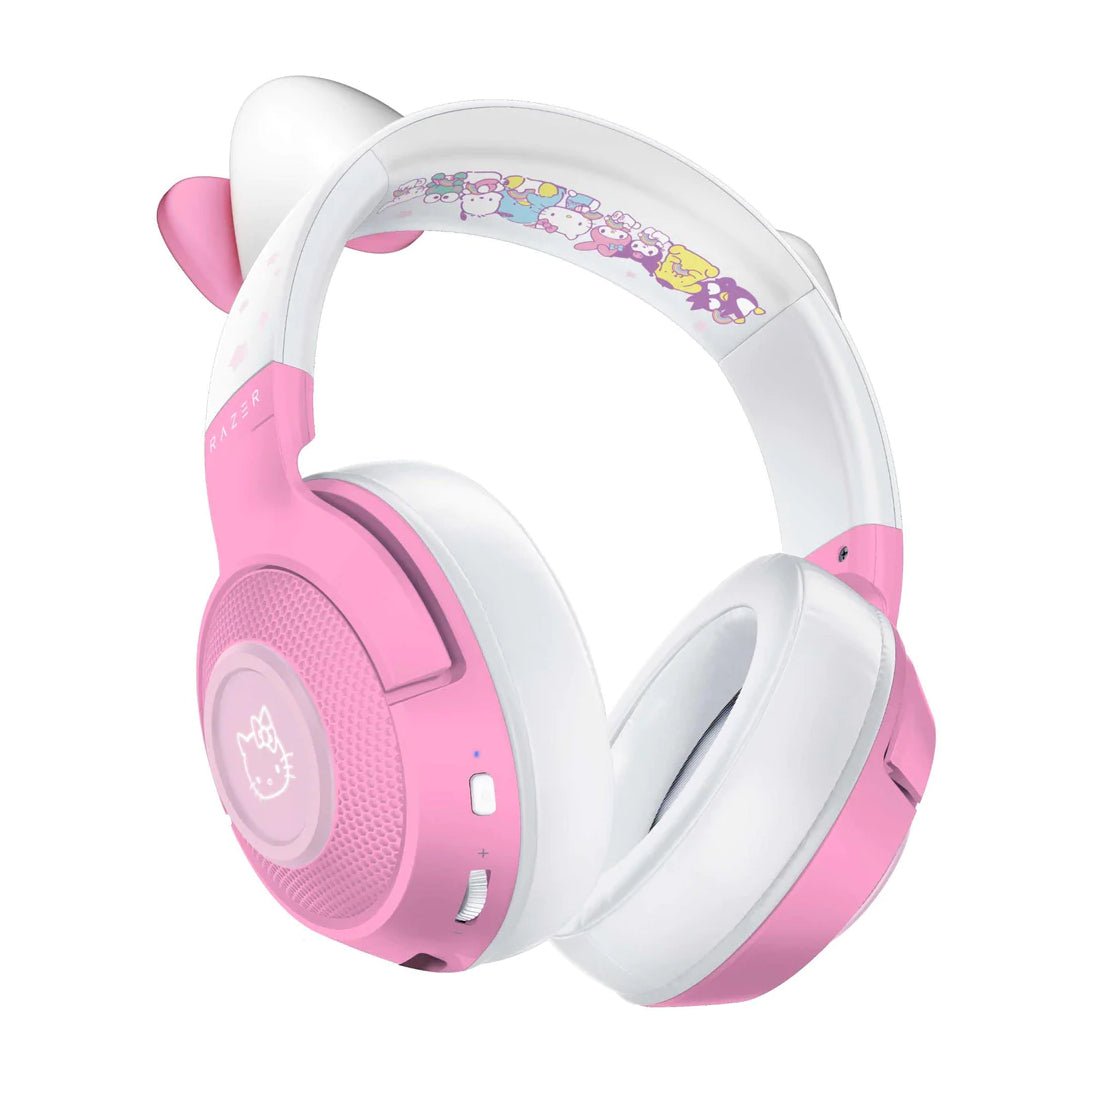 Razer Kraken BT Bluetooth Pink Gaming Headset - Kitty and Friends Edition - Store 974 | ستور ٩٧٤